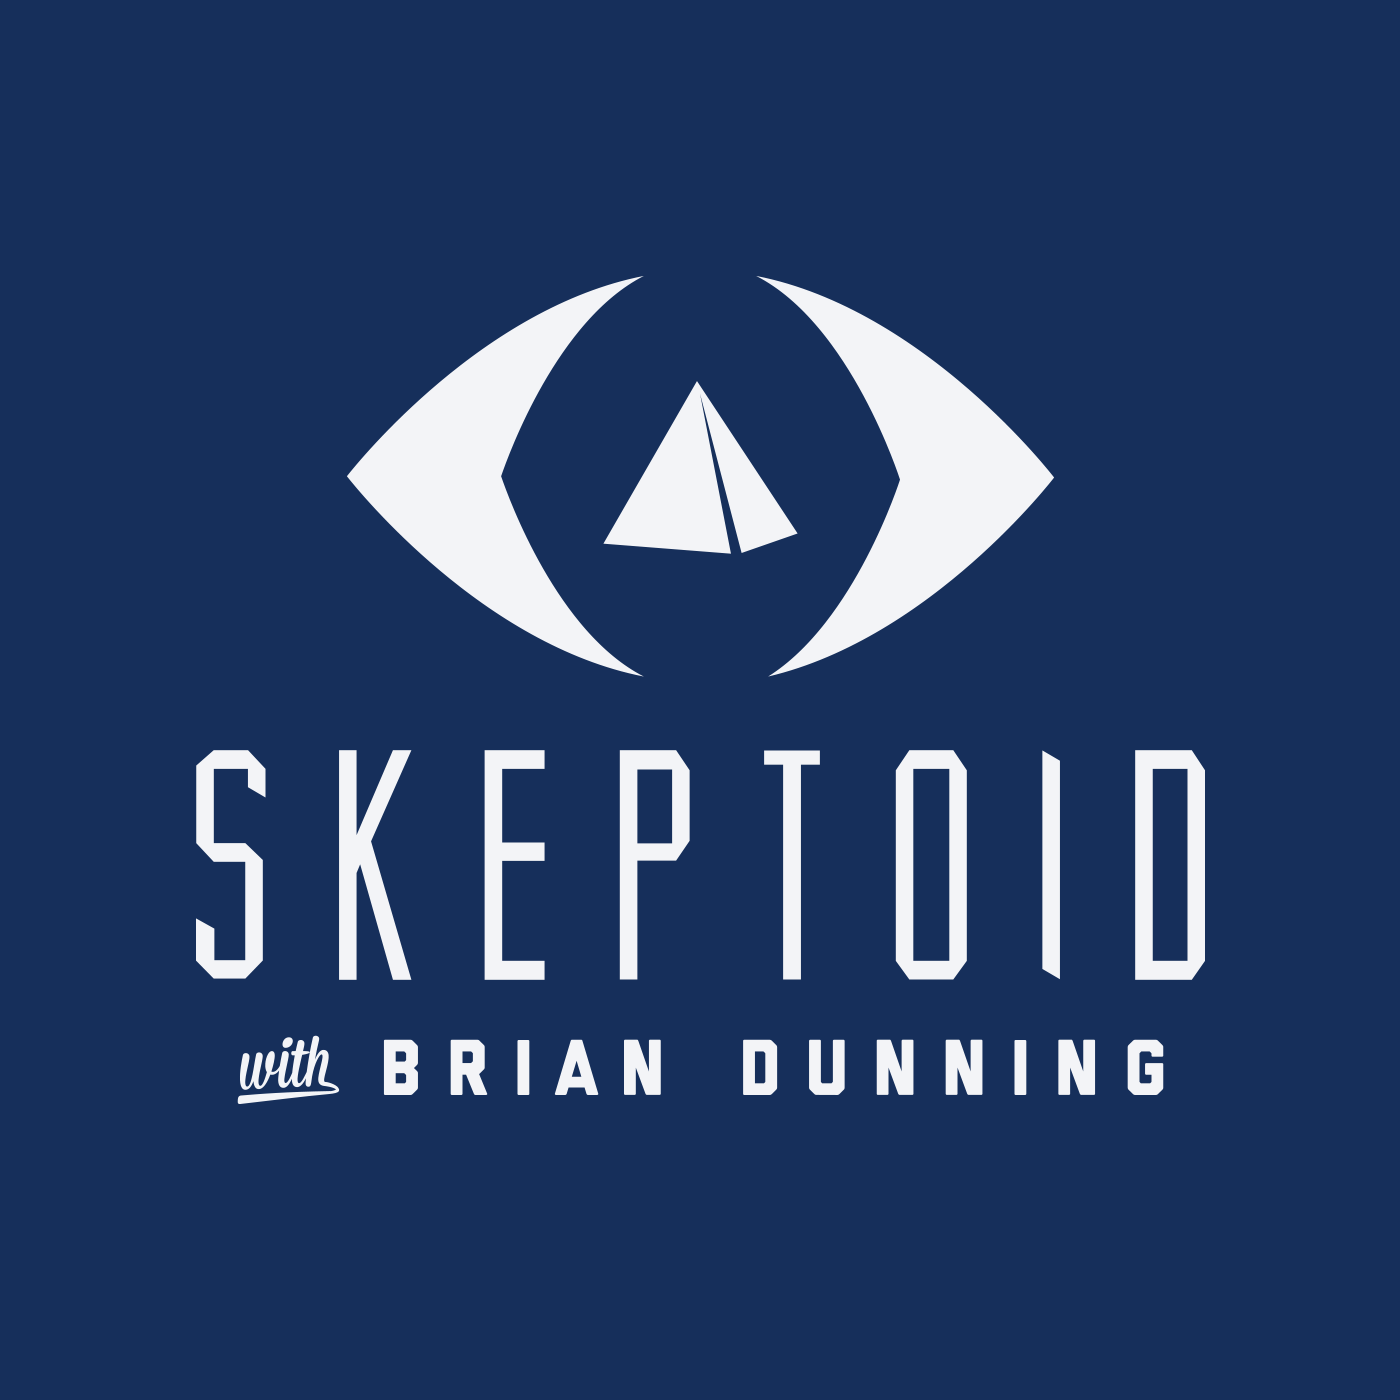 Skeptoid Episode Guide: Feedback & Questions